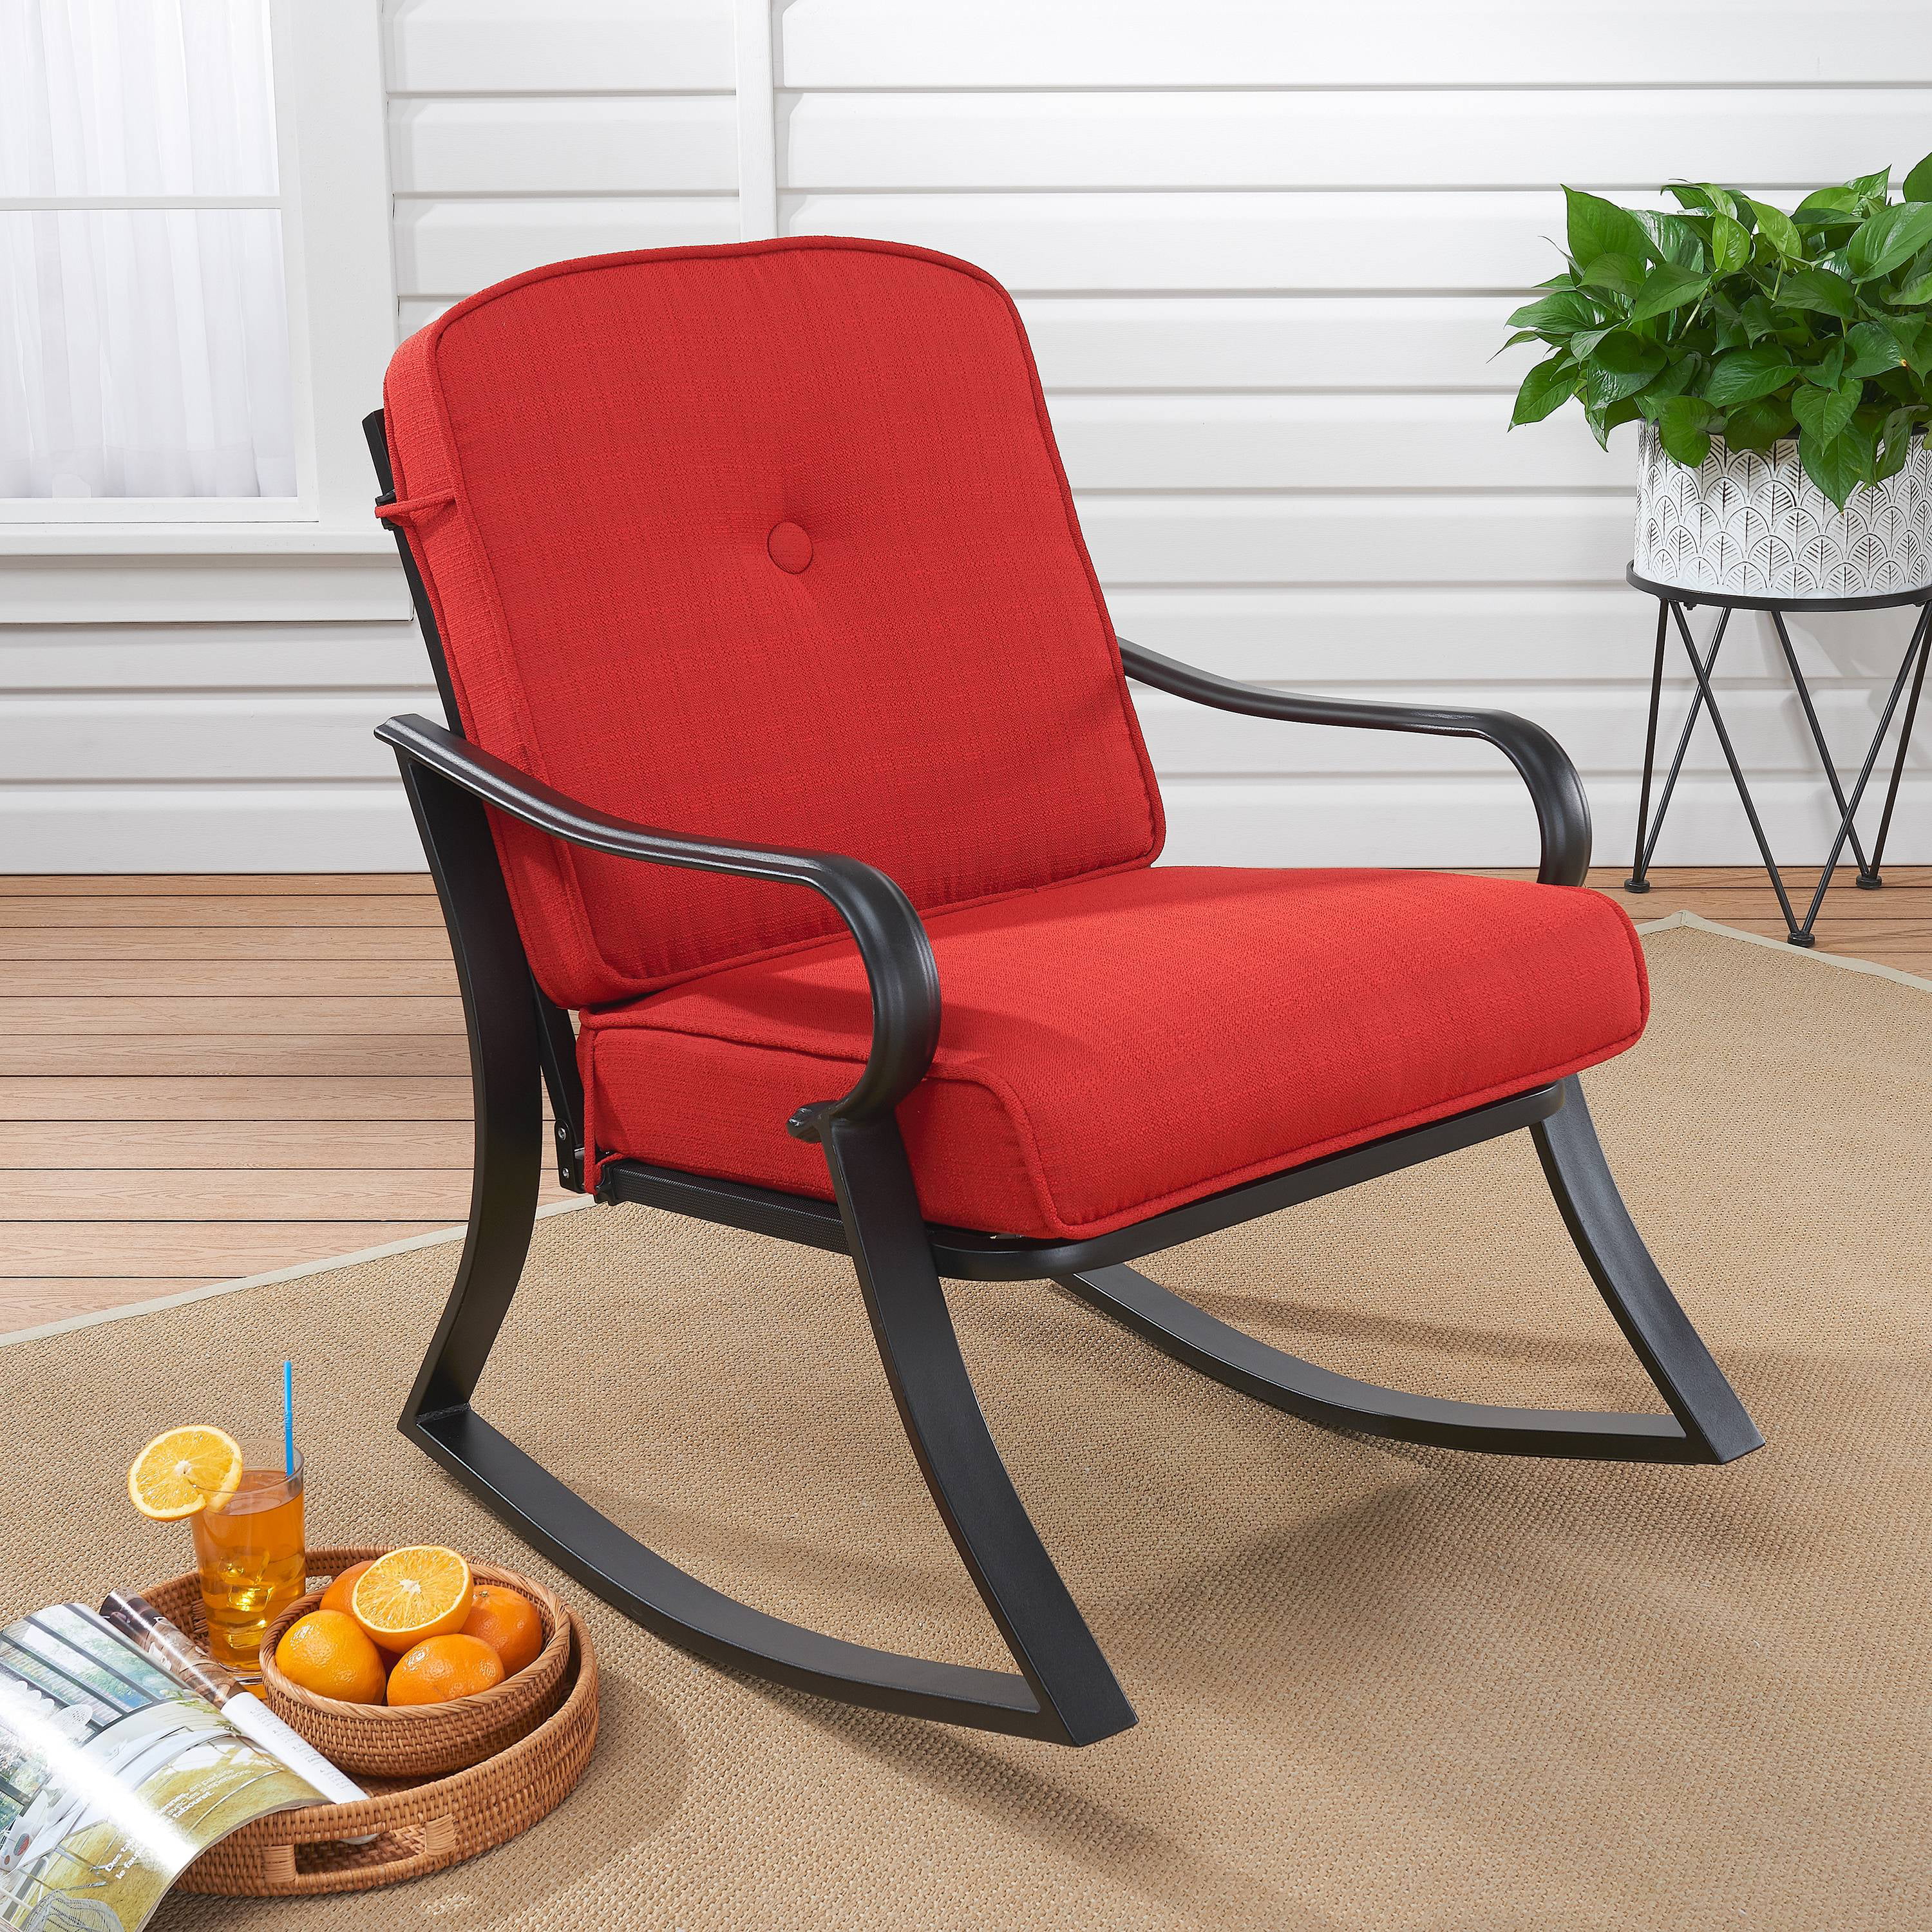 Mainstays Carson Creek Patio Rocking Chair with Brick Red Cushions -
Walmart.com - Walmart.com